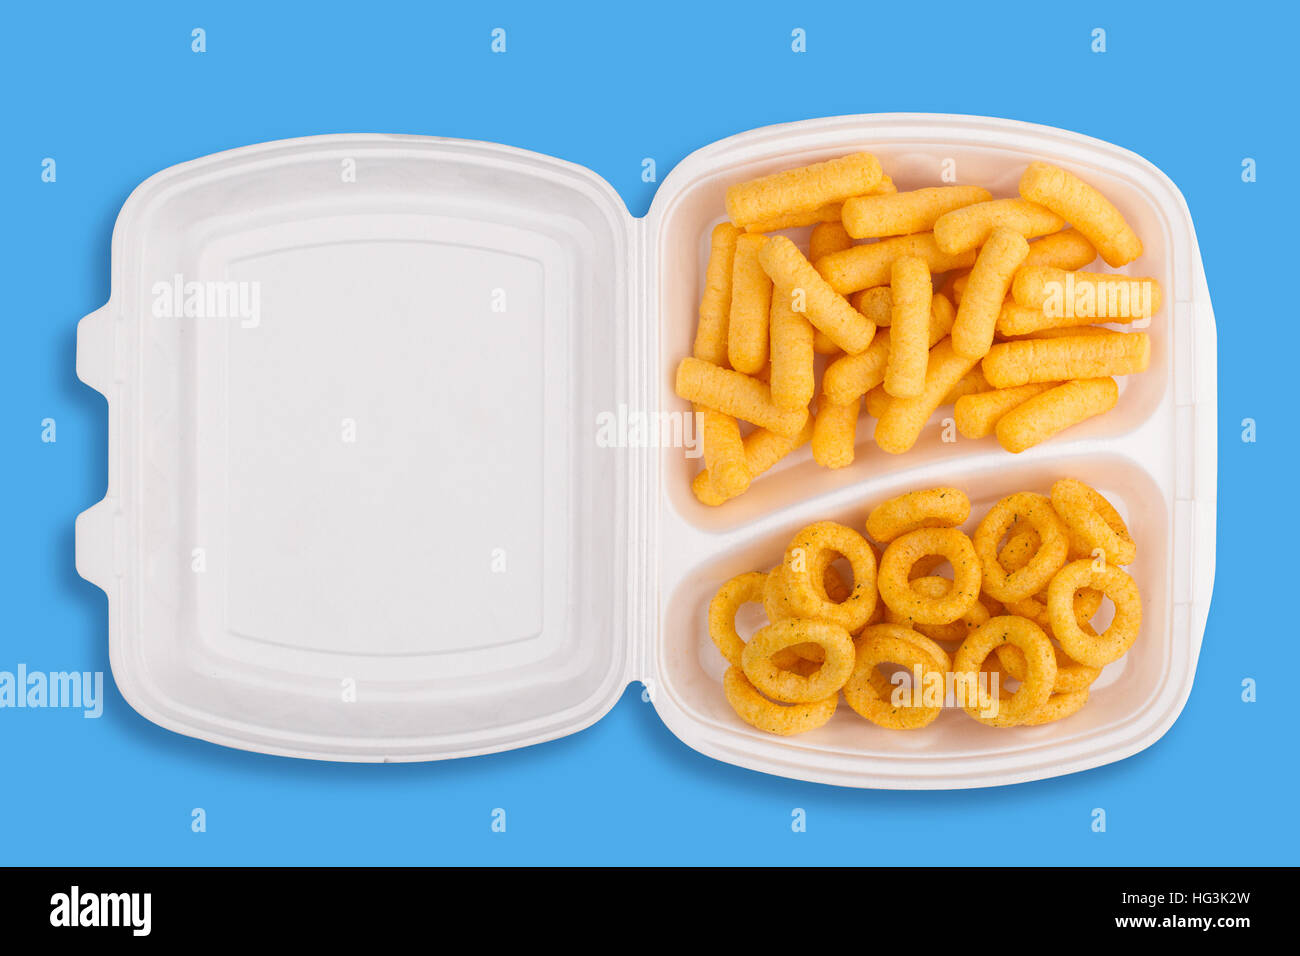 https://c8.alamy.com/comp/HG3K2W/top-view-of-junk-food-ingredients-in-a-white-take-away-packaging-box-HG3K2W.jpg